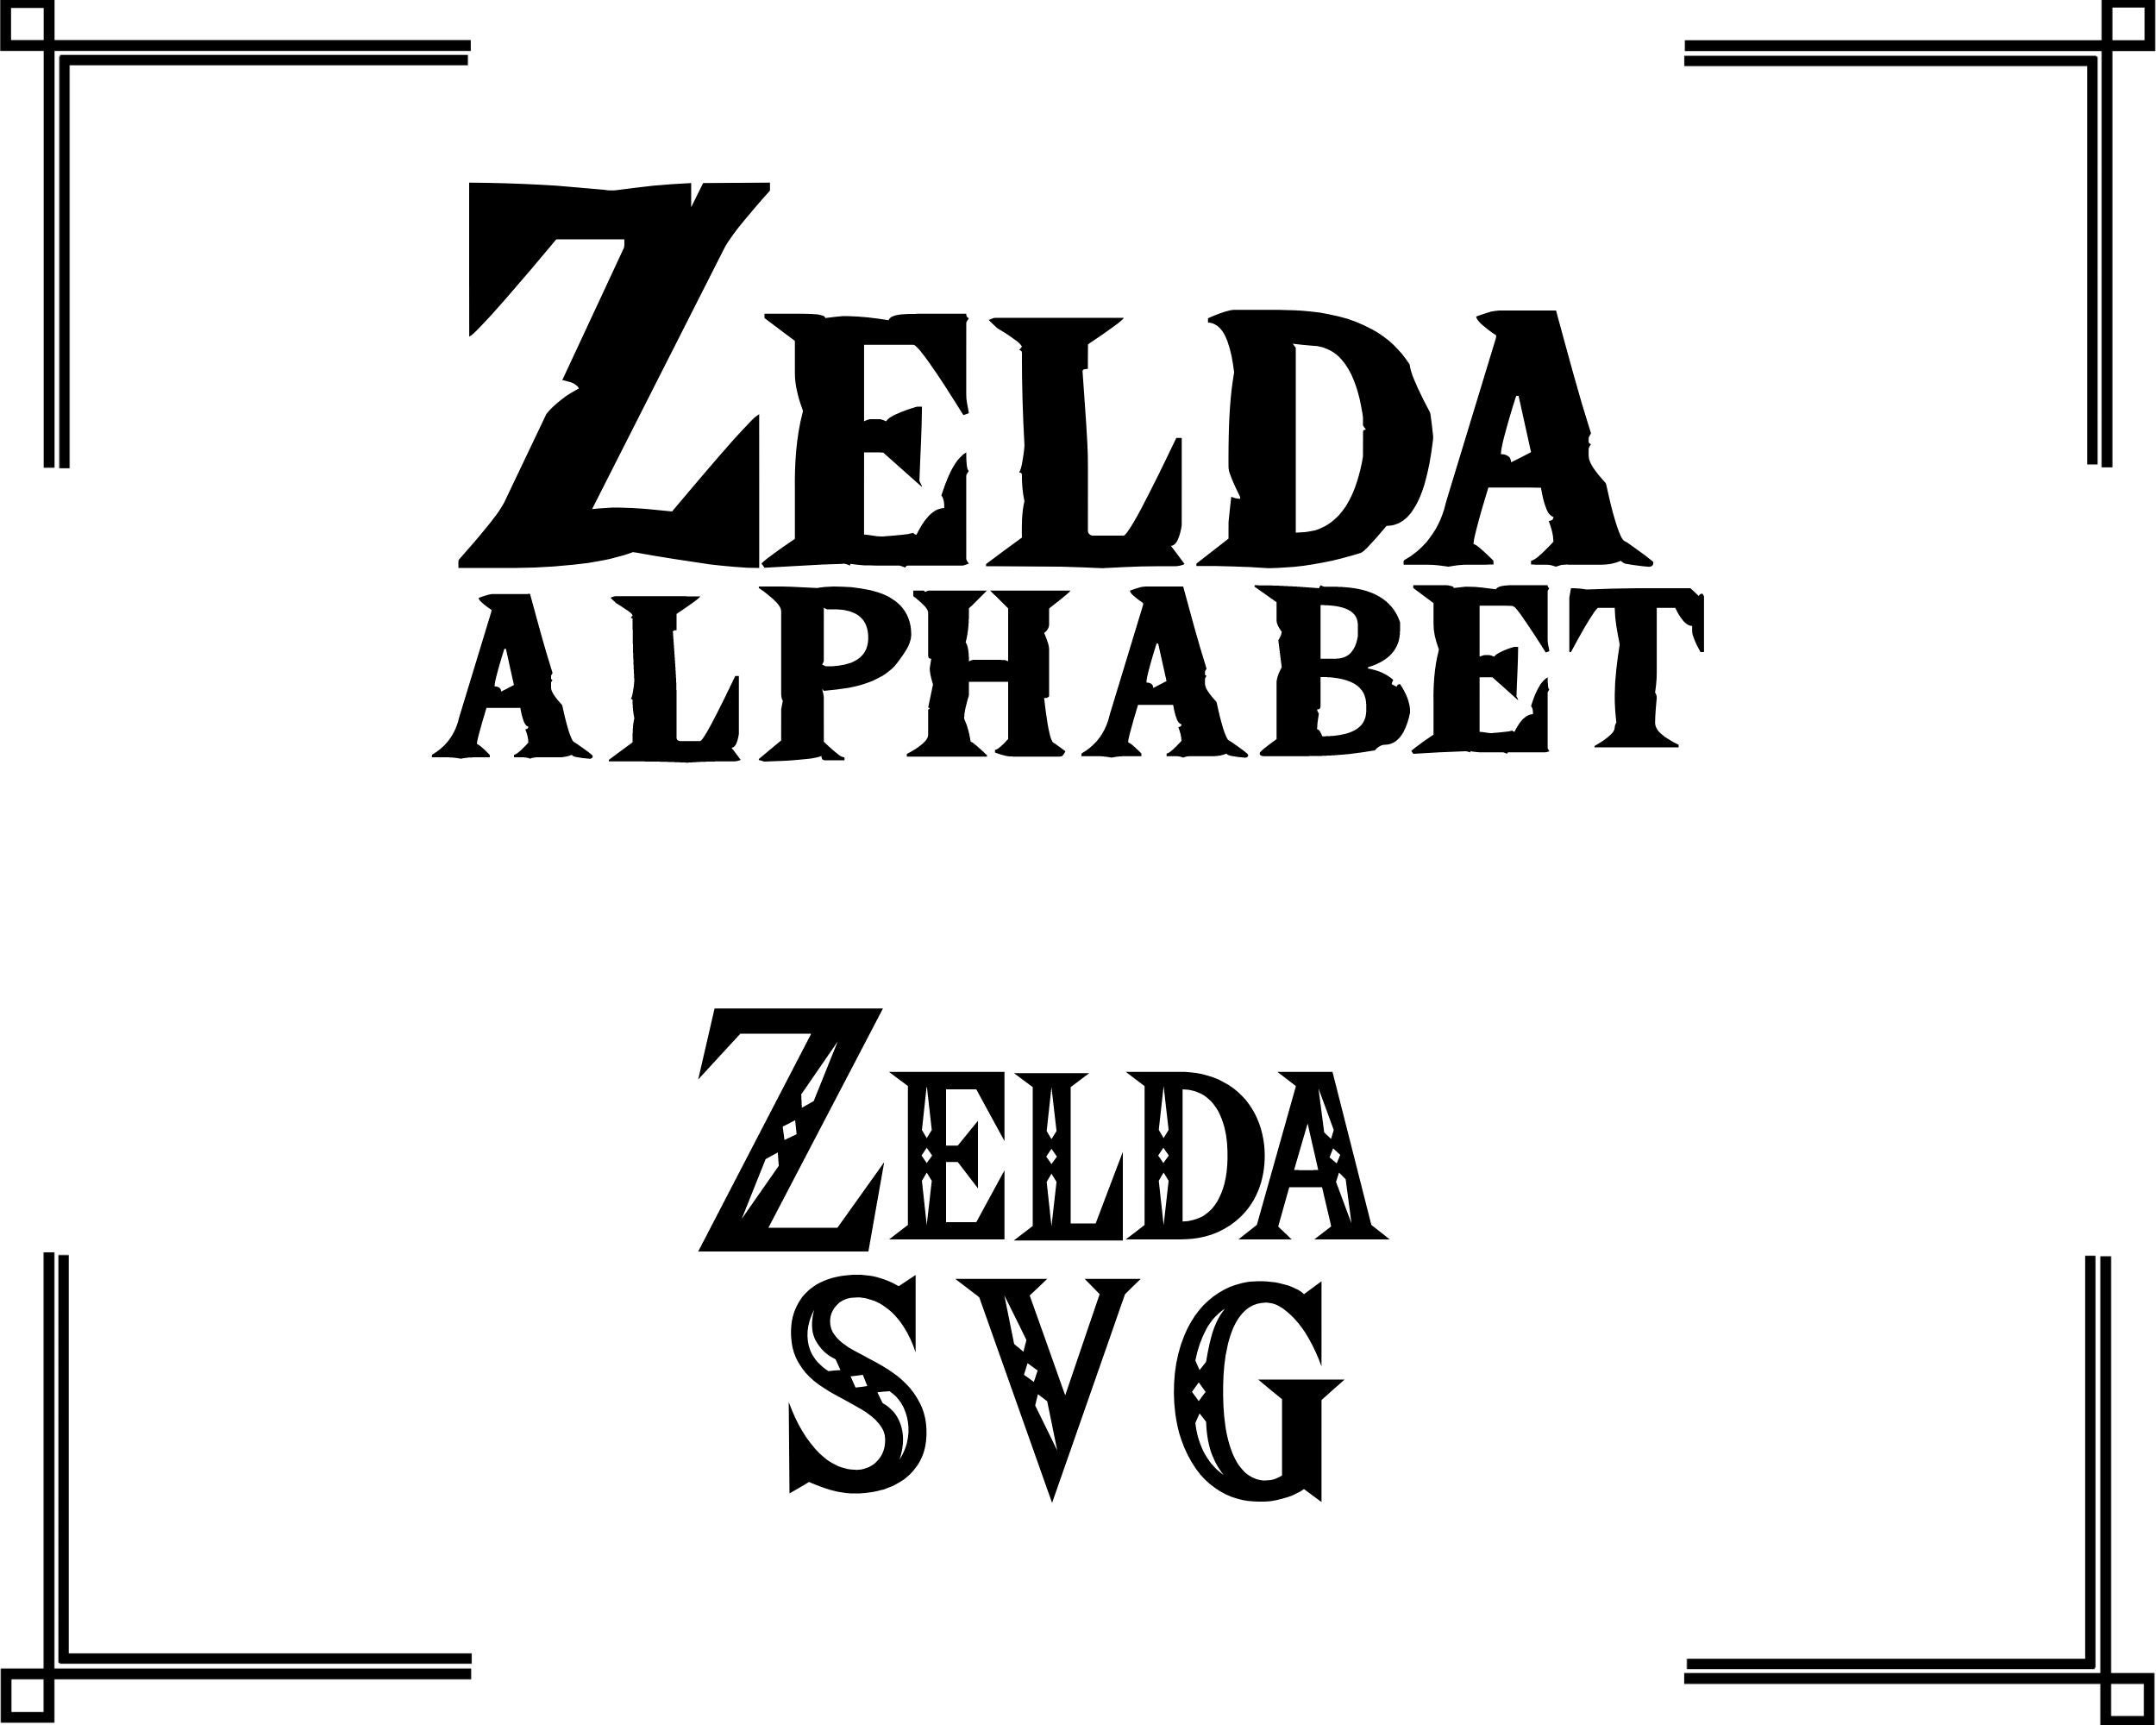 Zelda's Letter by gaaraofthesandbox on DeviantArt